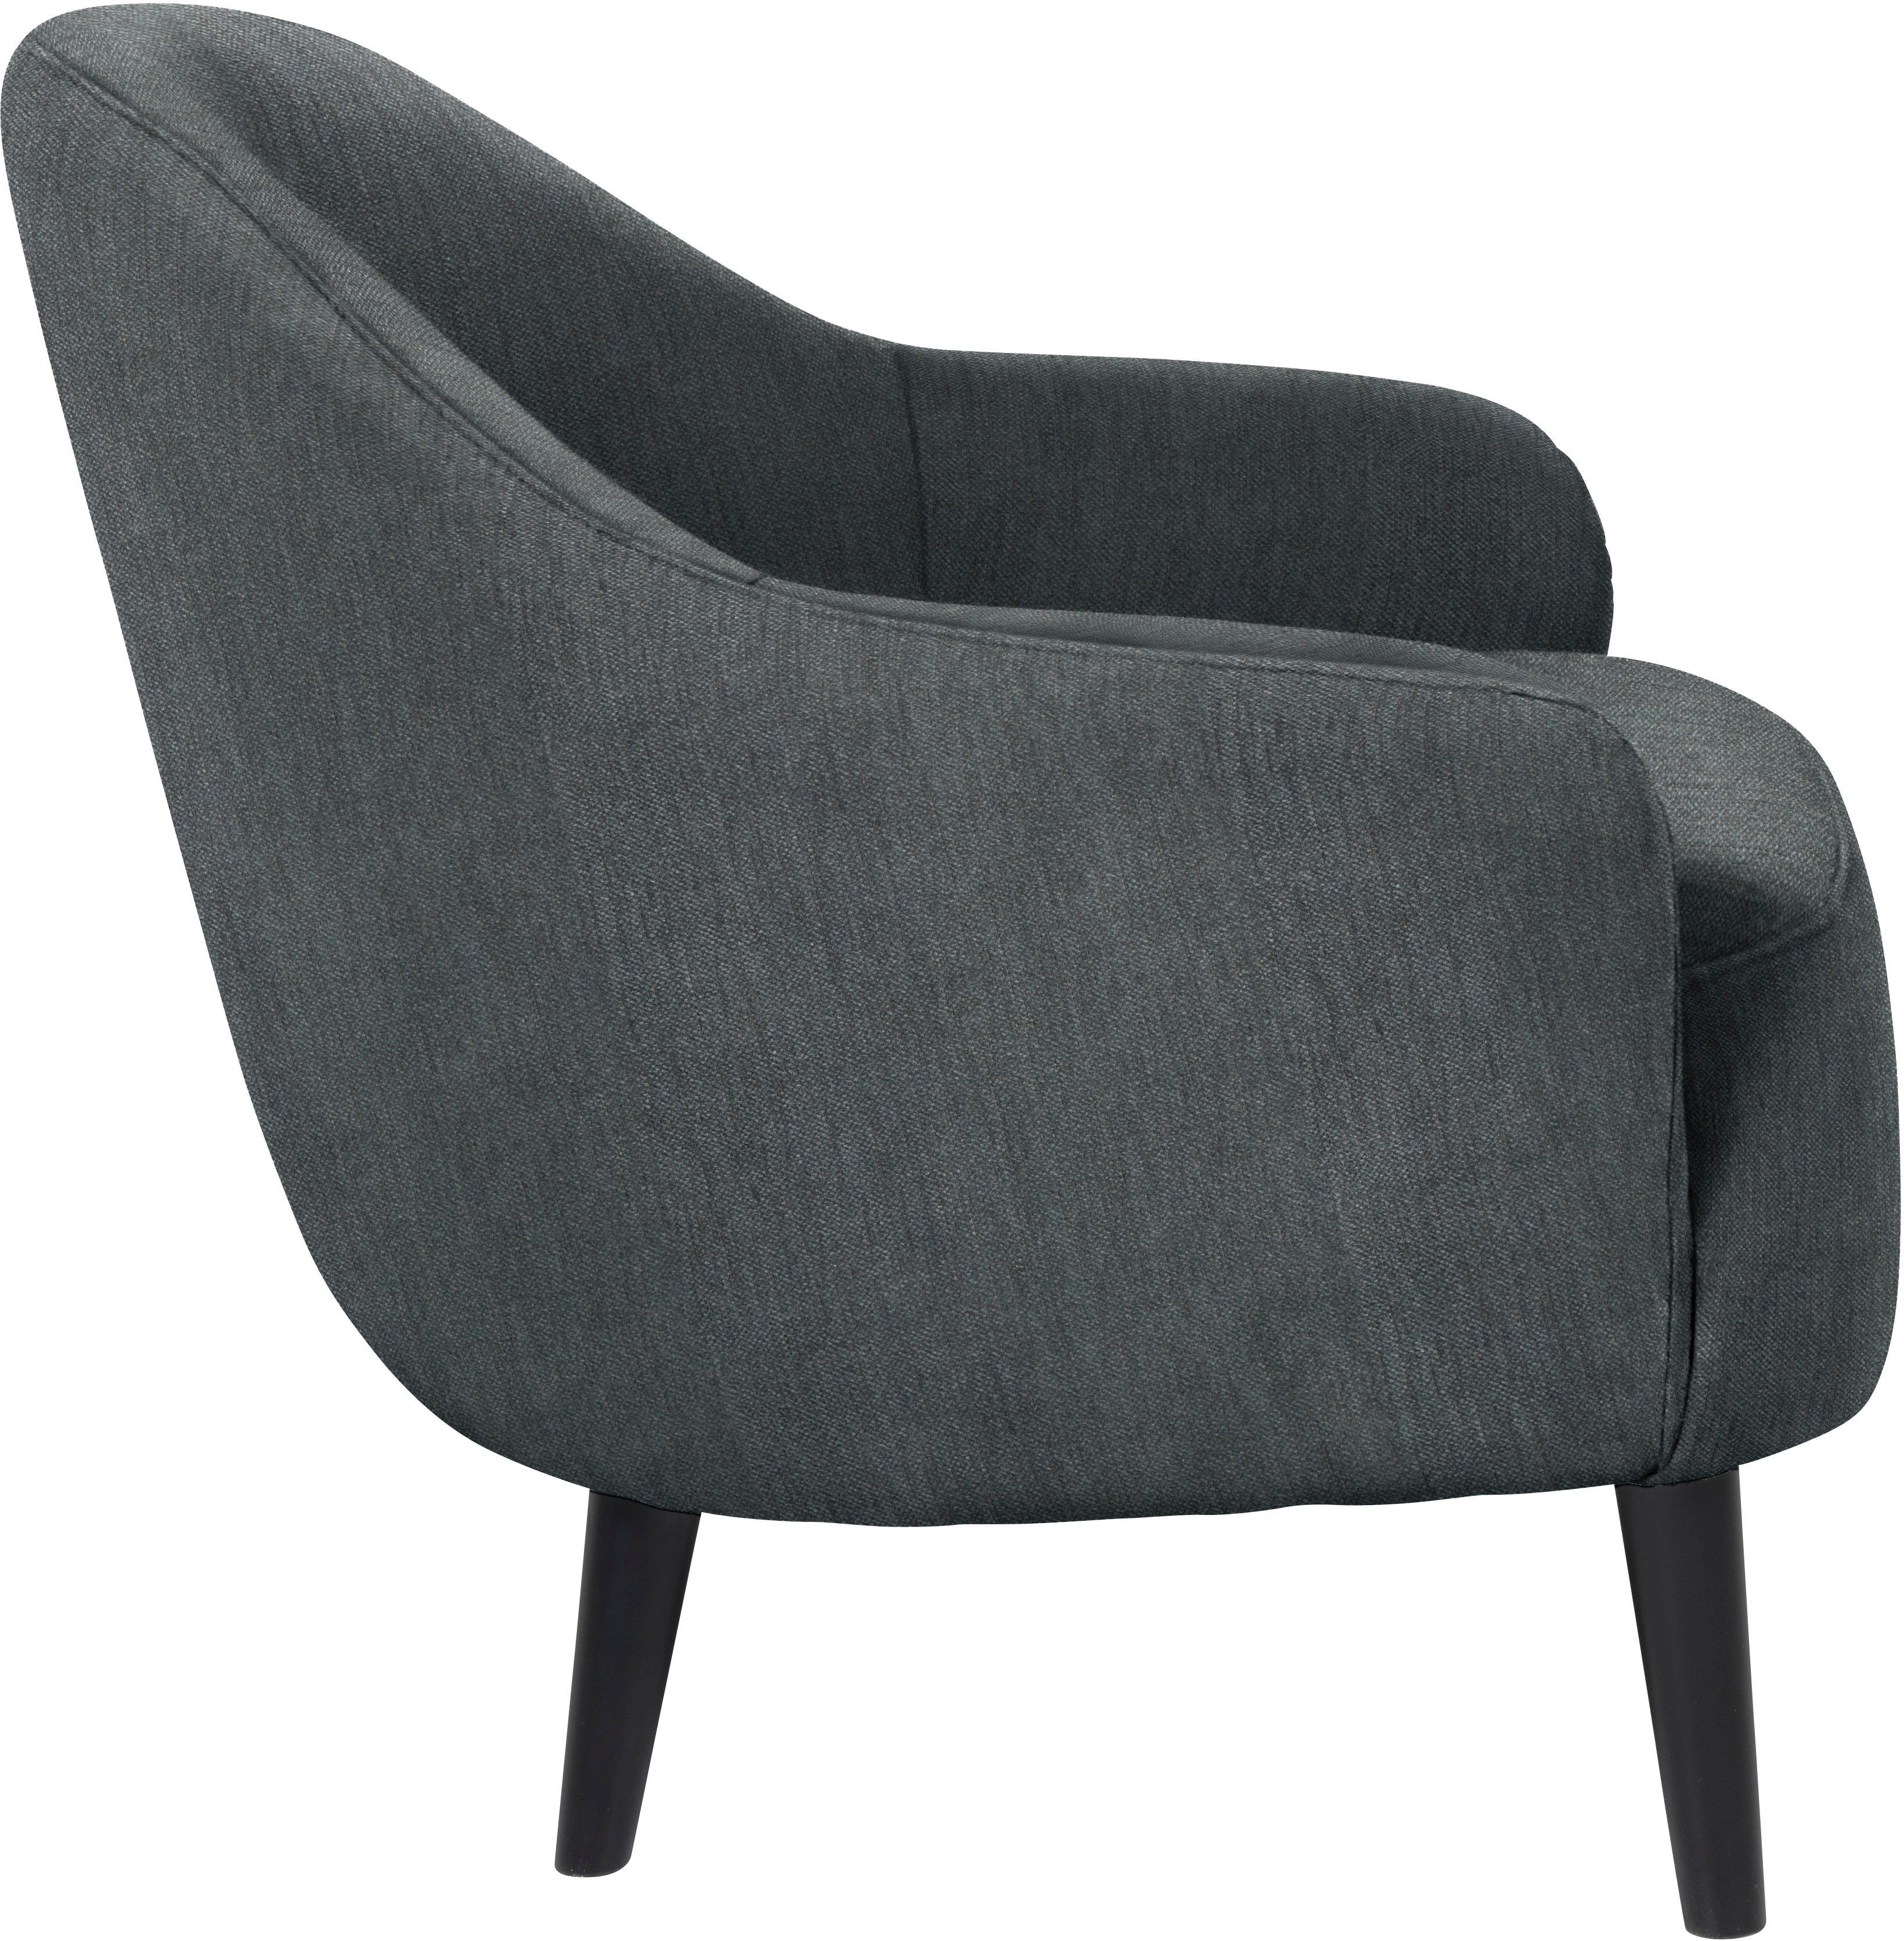 im wahlweise Design Loungesessel skandinavischen mit Paloma, grey furninova Chromfuß,